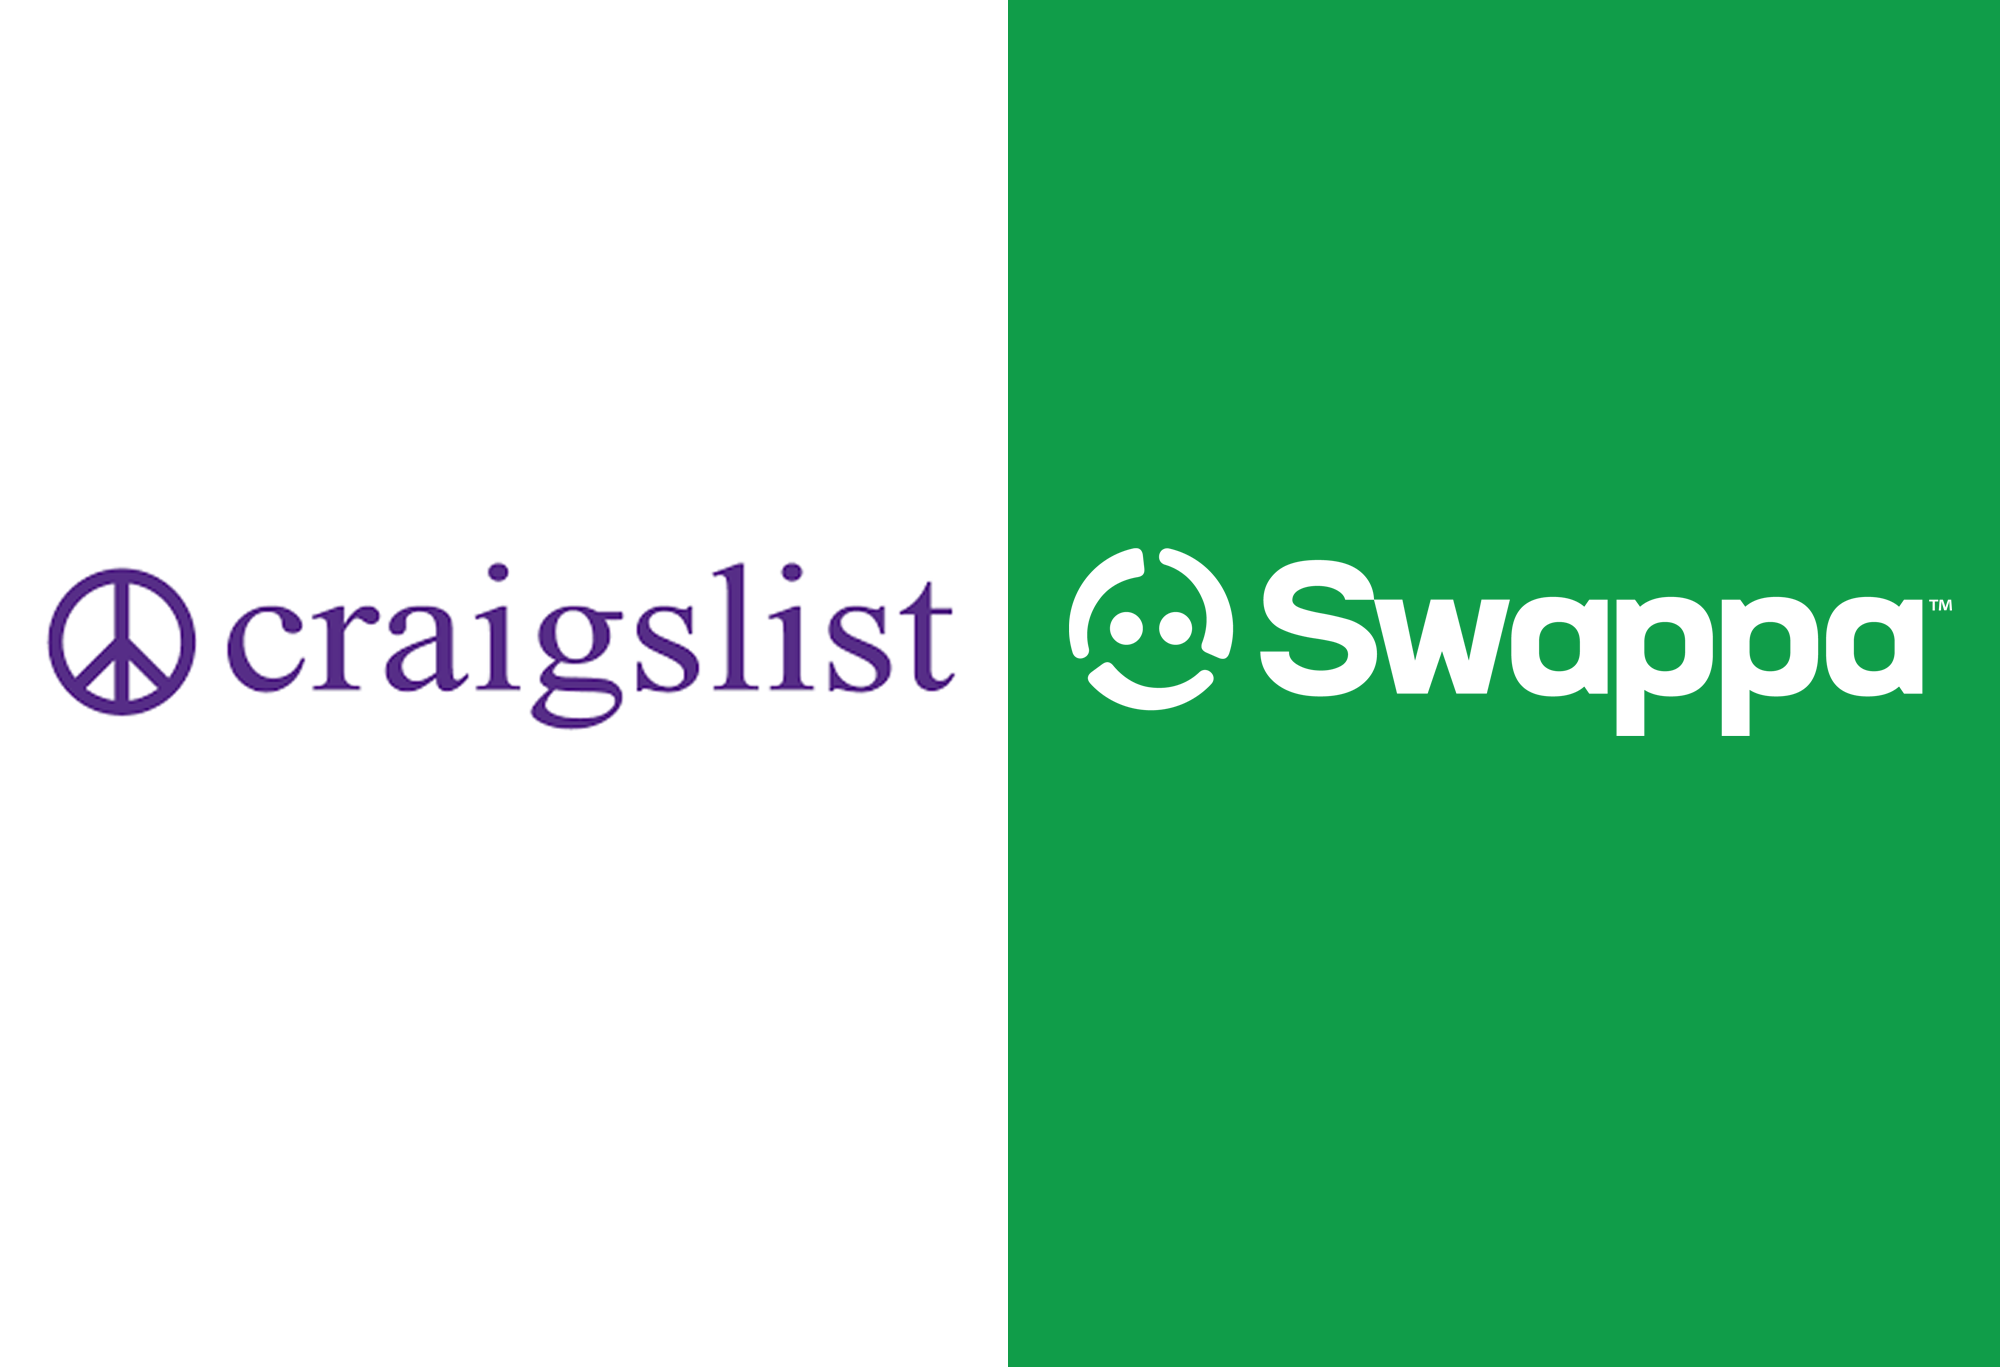 Craigslist vs Swappa